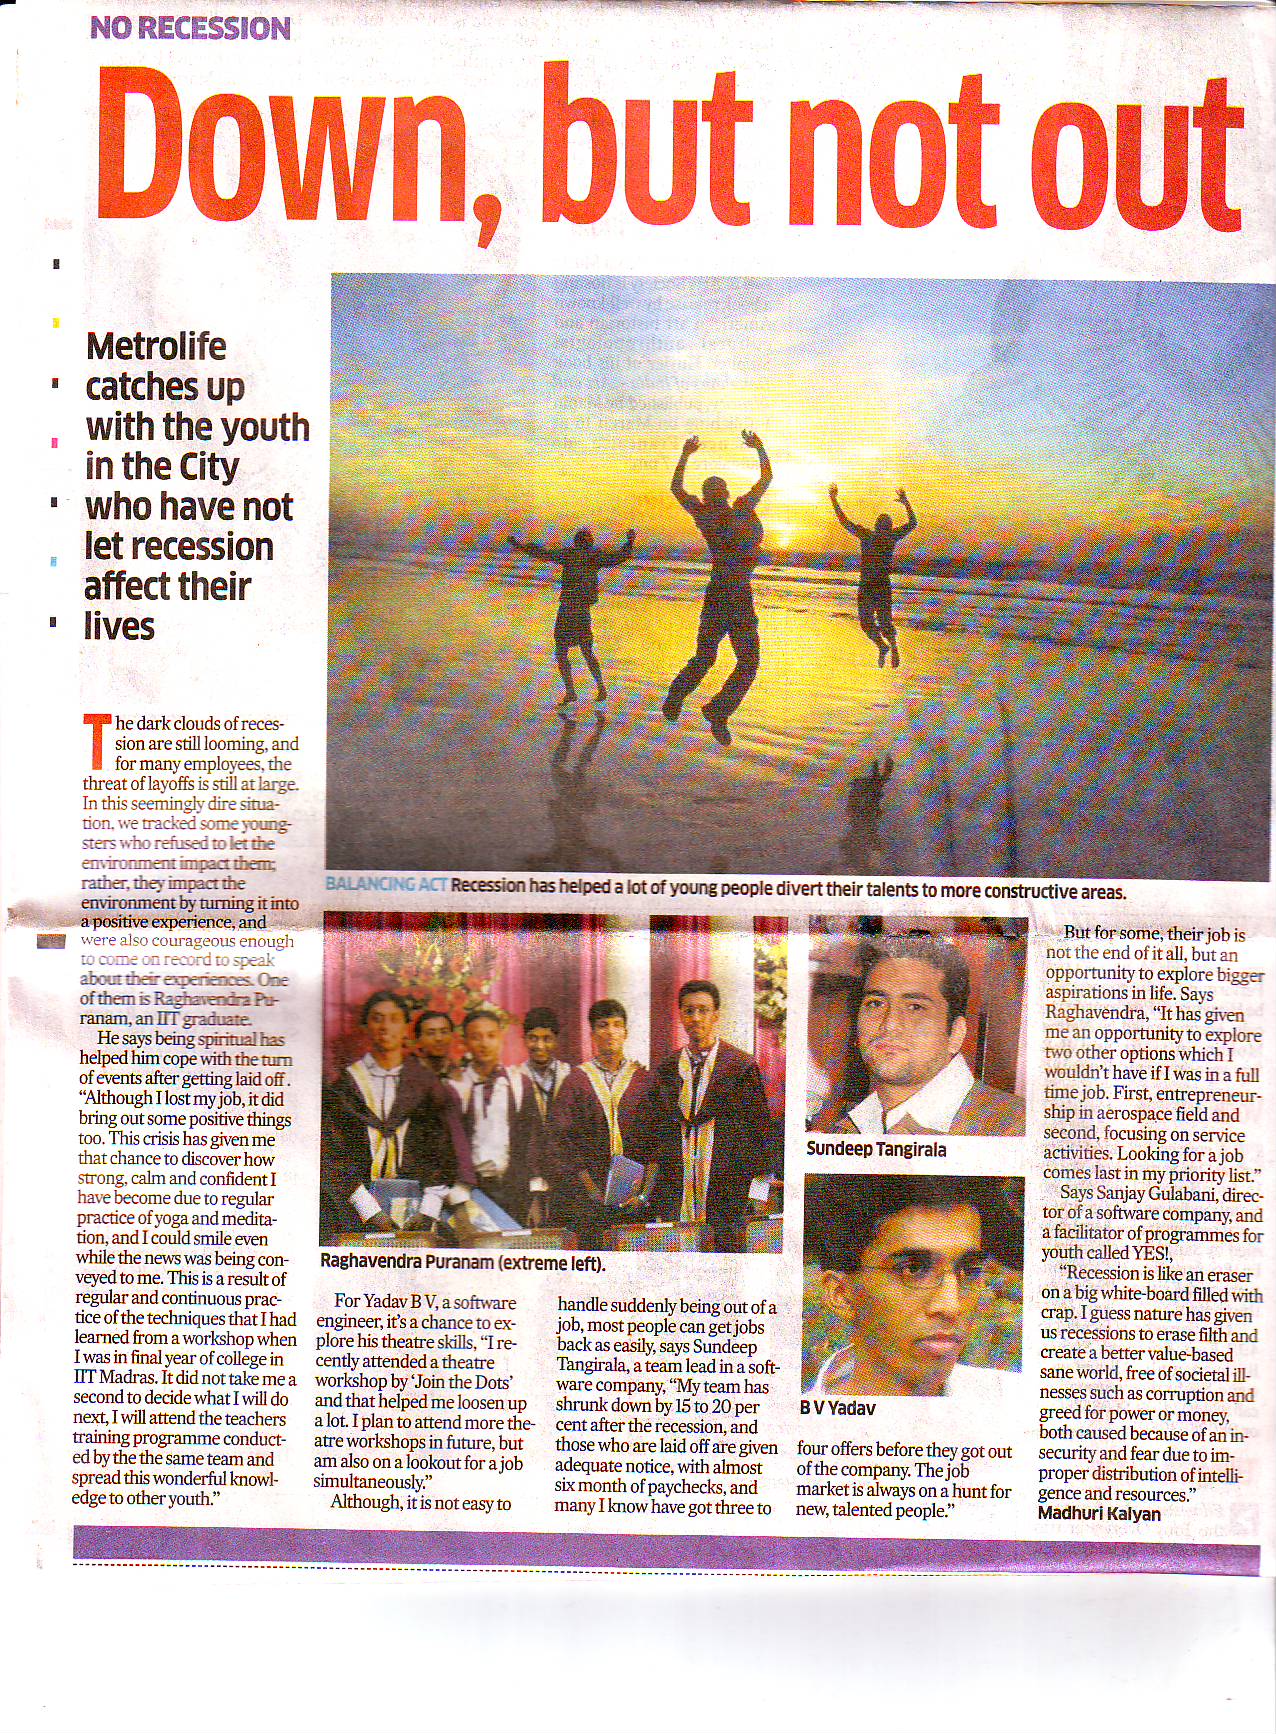 Deccan Herald, 13 March 2009